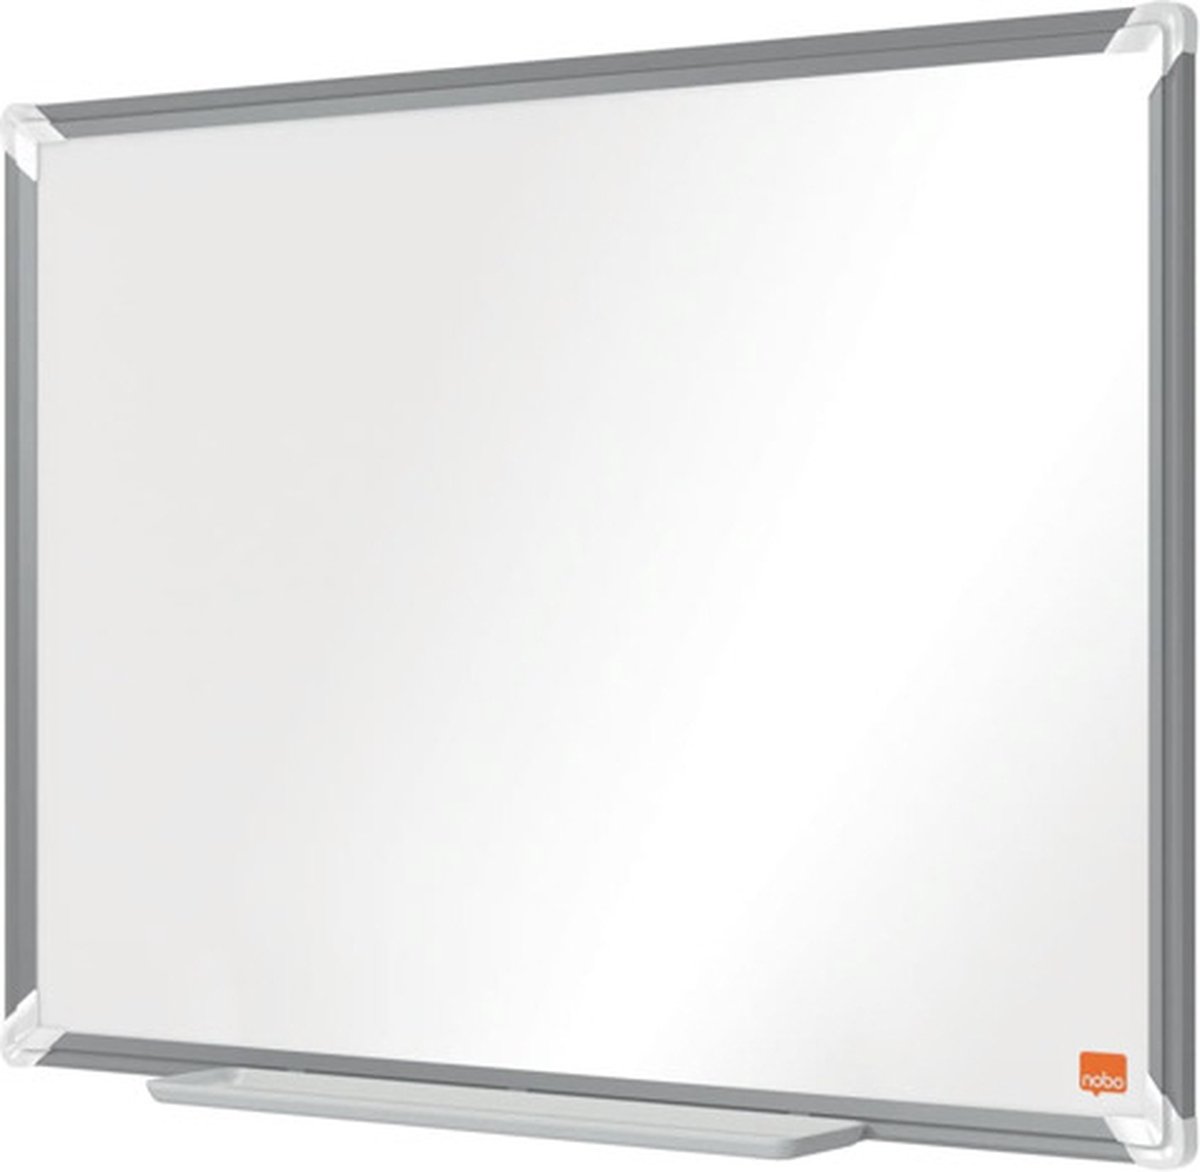 NOBO Whiteboard Magnetisch Premium Plus 60x45 Cm Email